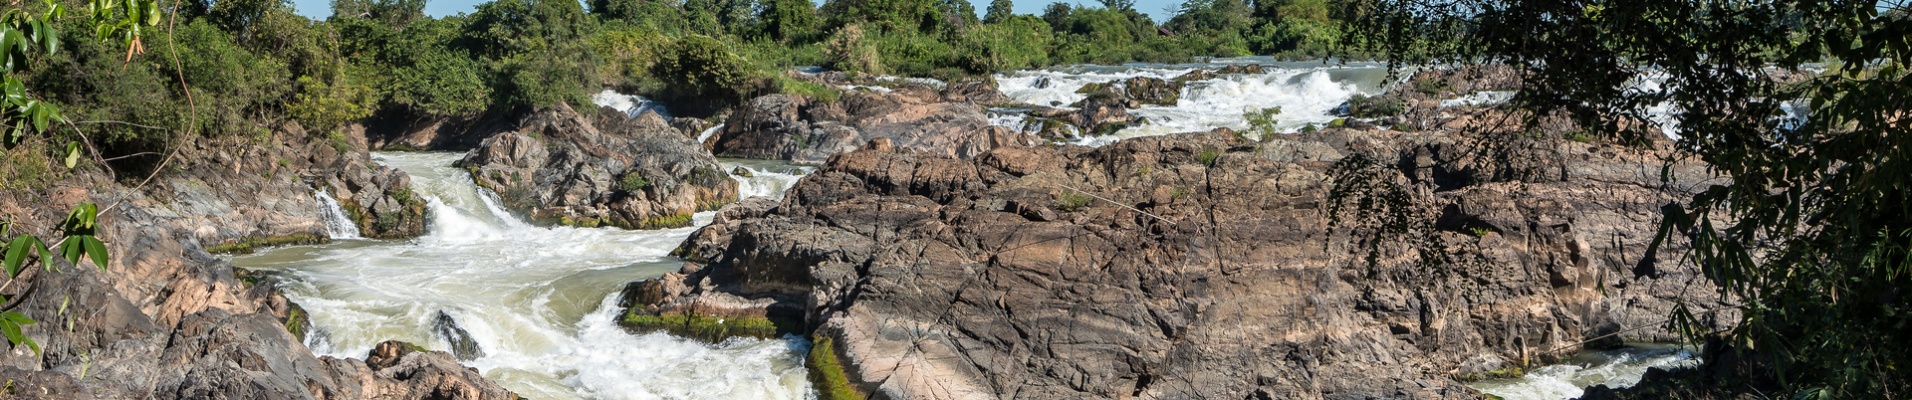 cascade li phi laos